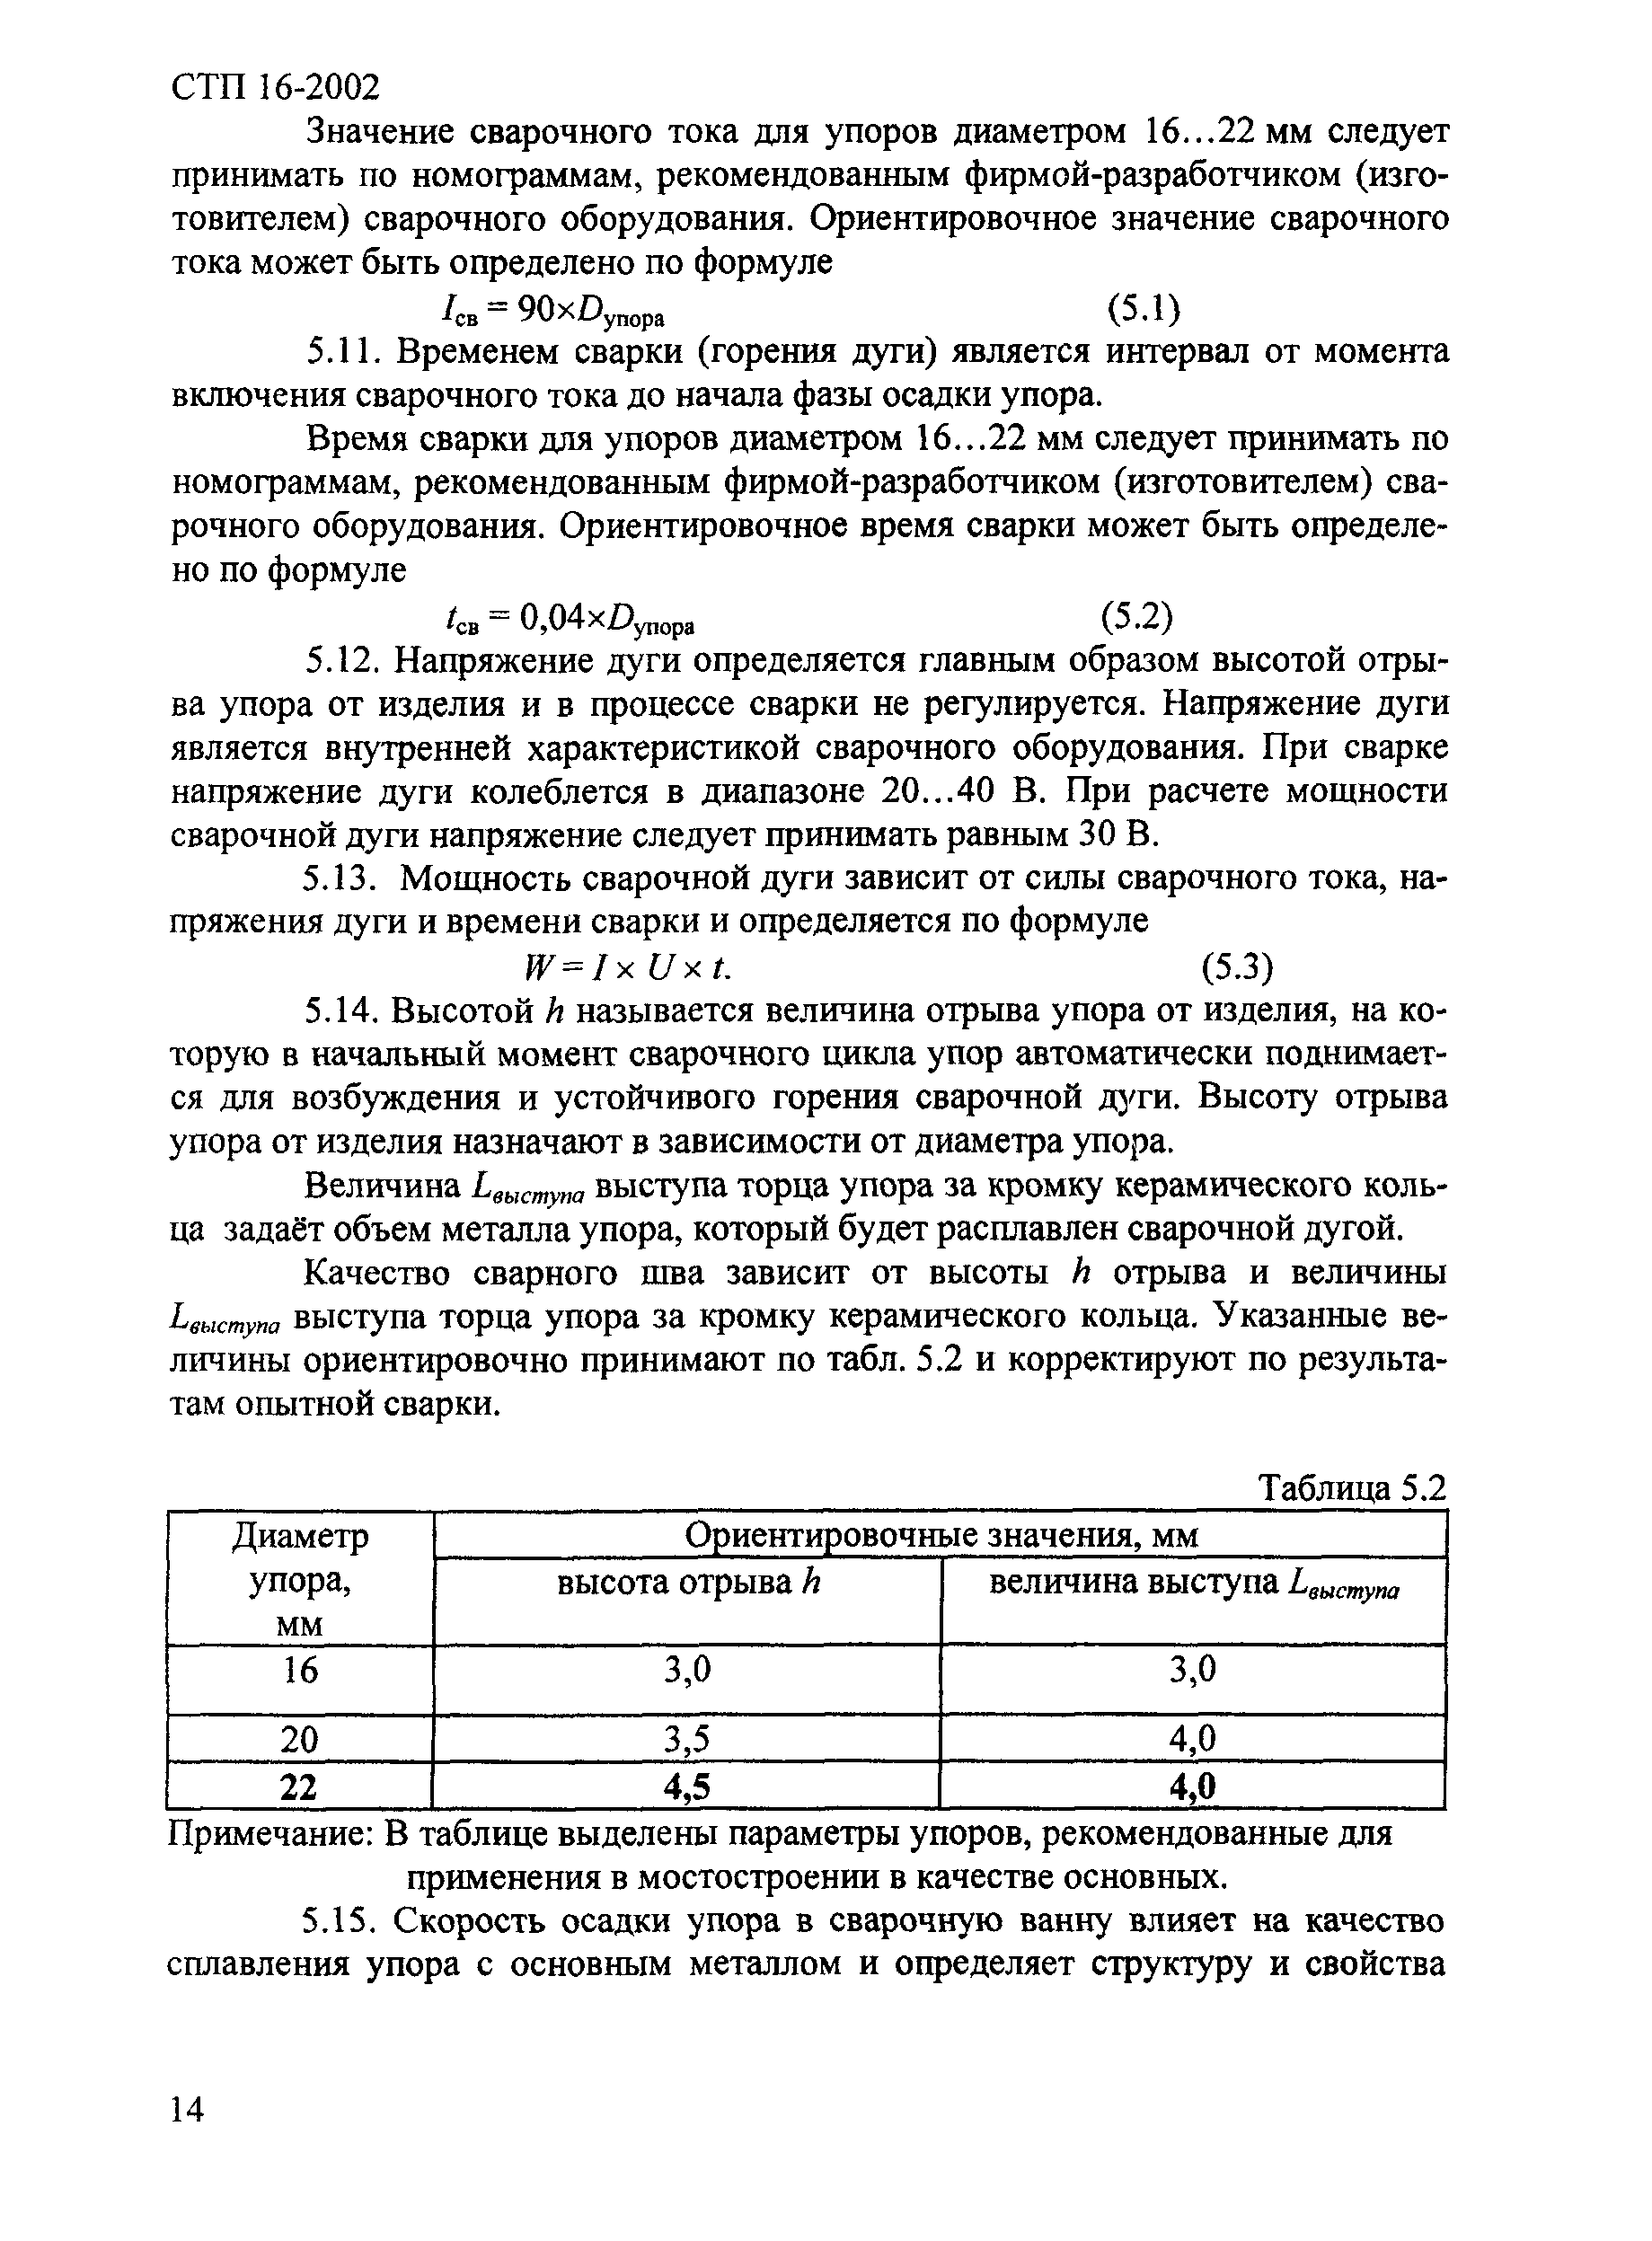 СТП 016-2002